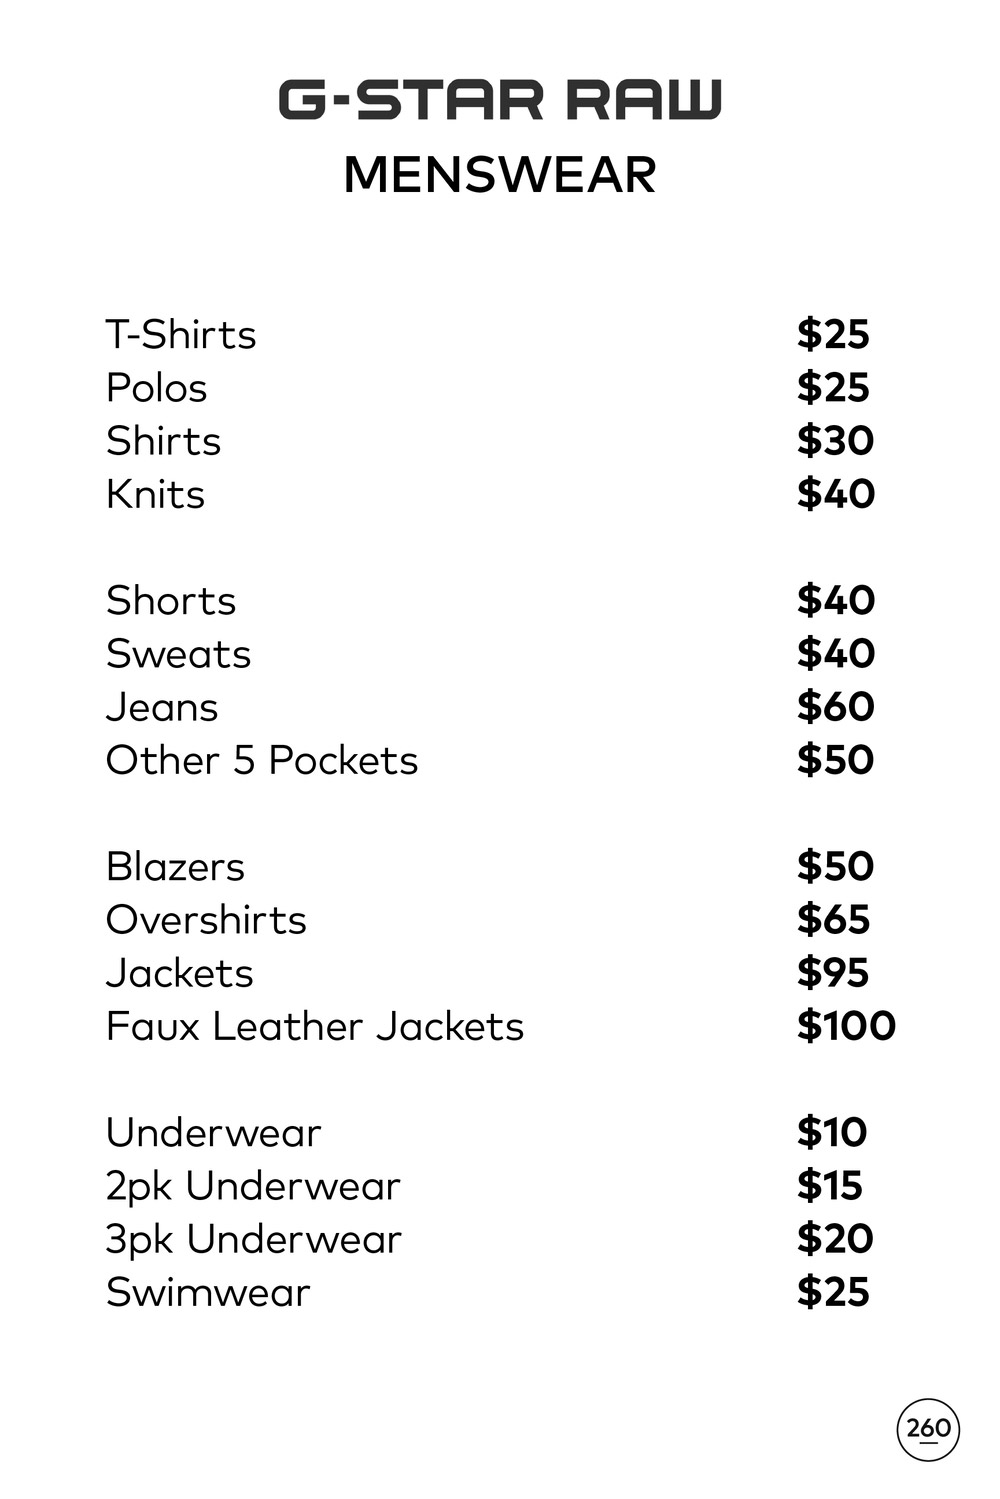 G-Star RAW Sample Sale Menswear Price List